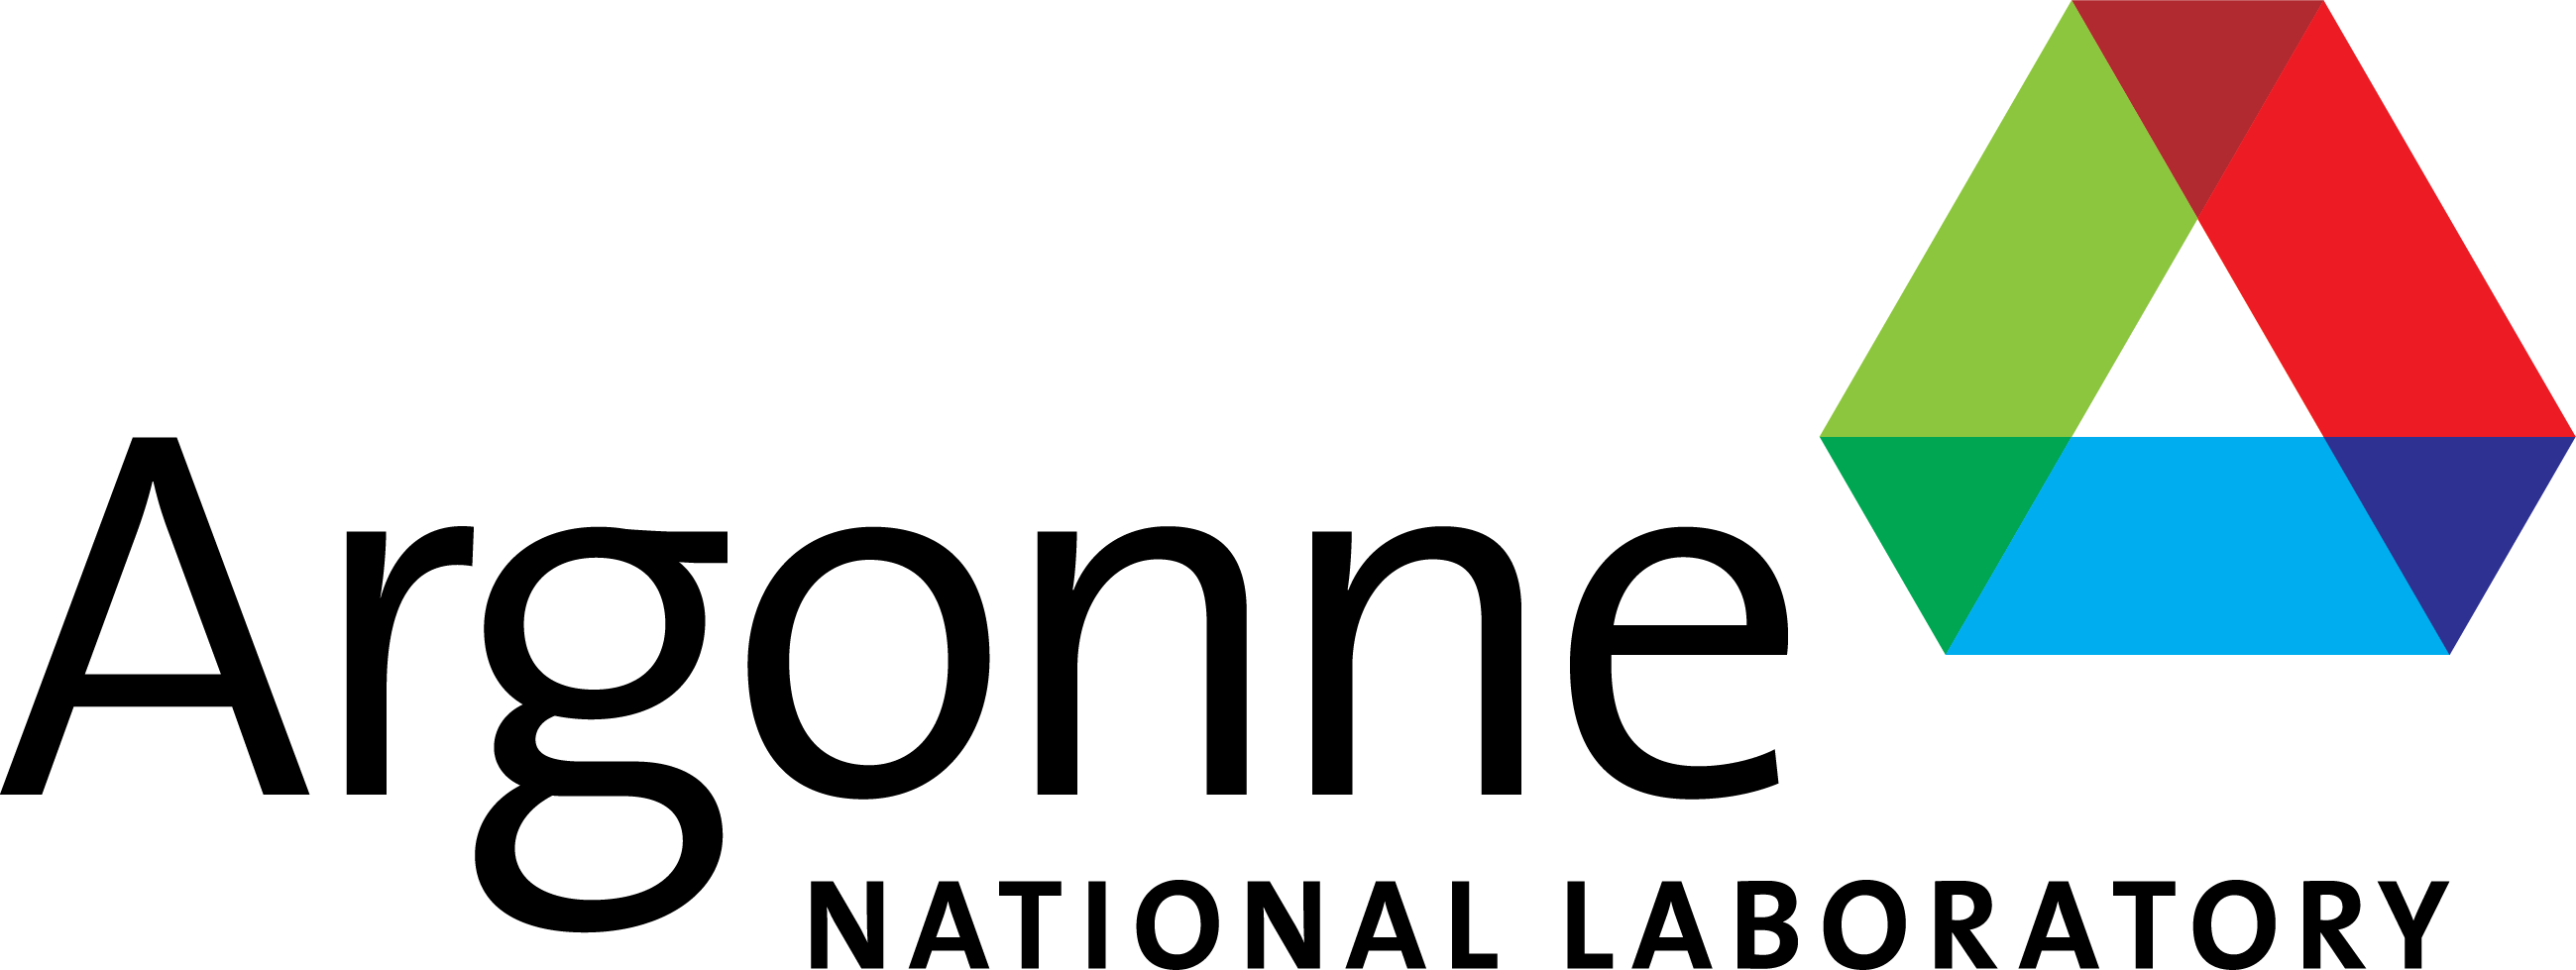 Argonne National Laboratory's logo